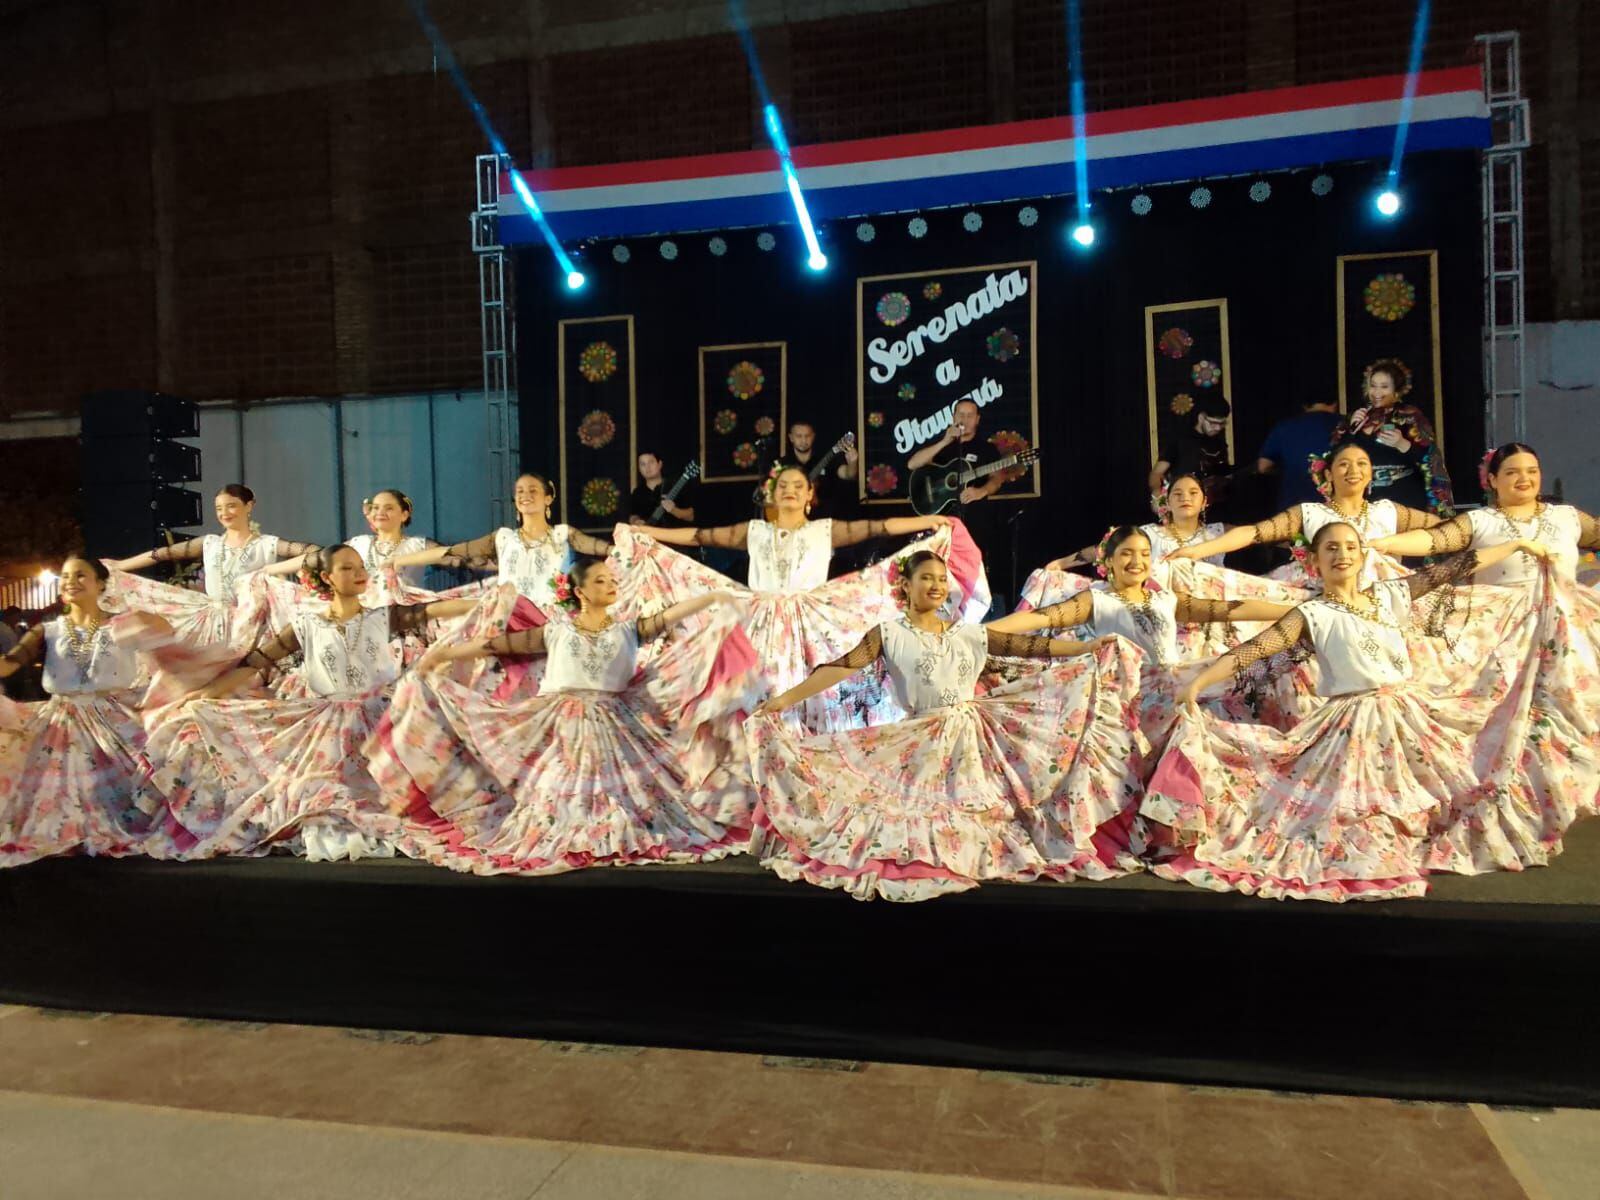 Bailarinas de la Academia Kandy Arce lanzaron varias pocas paraguayas.